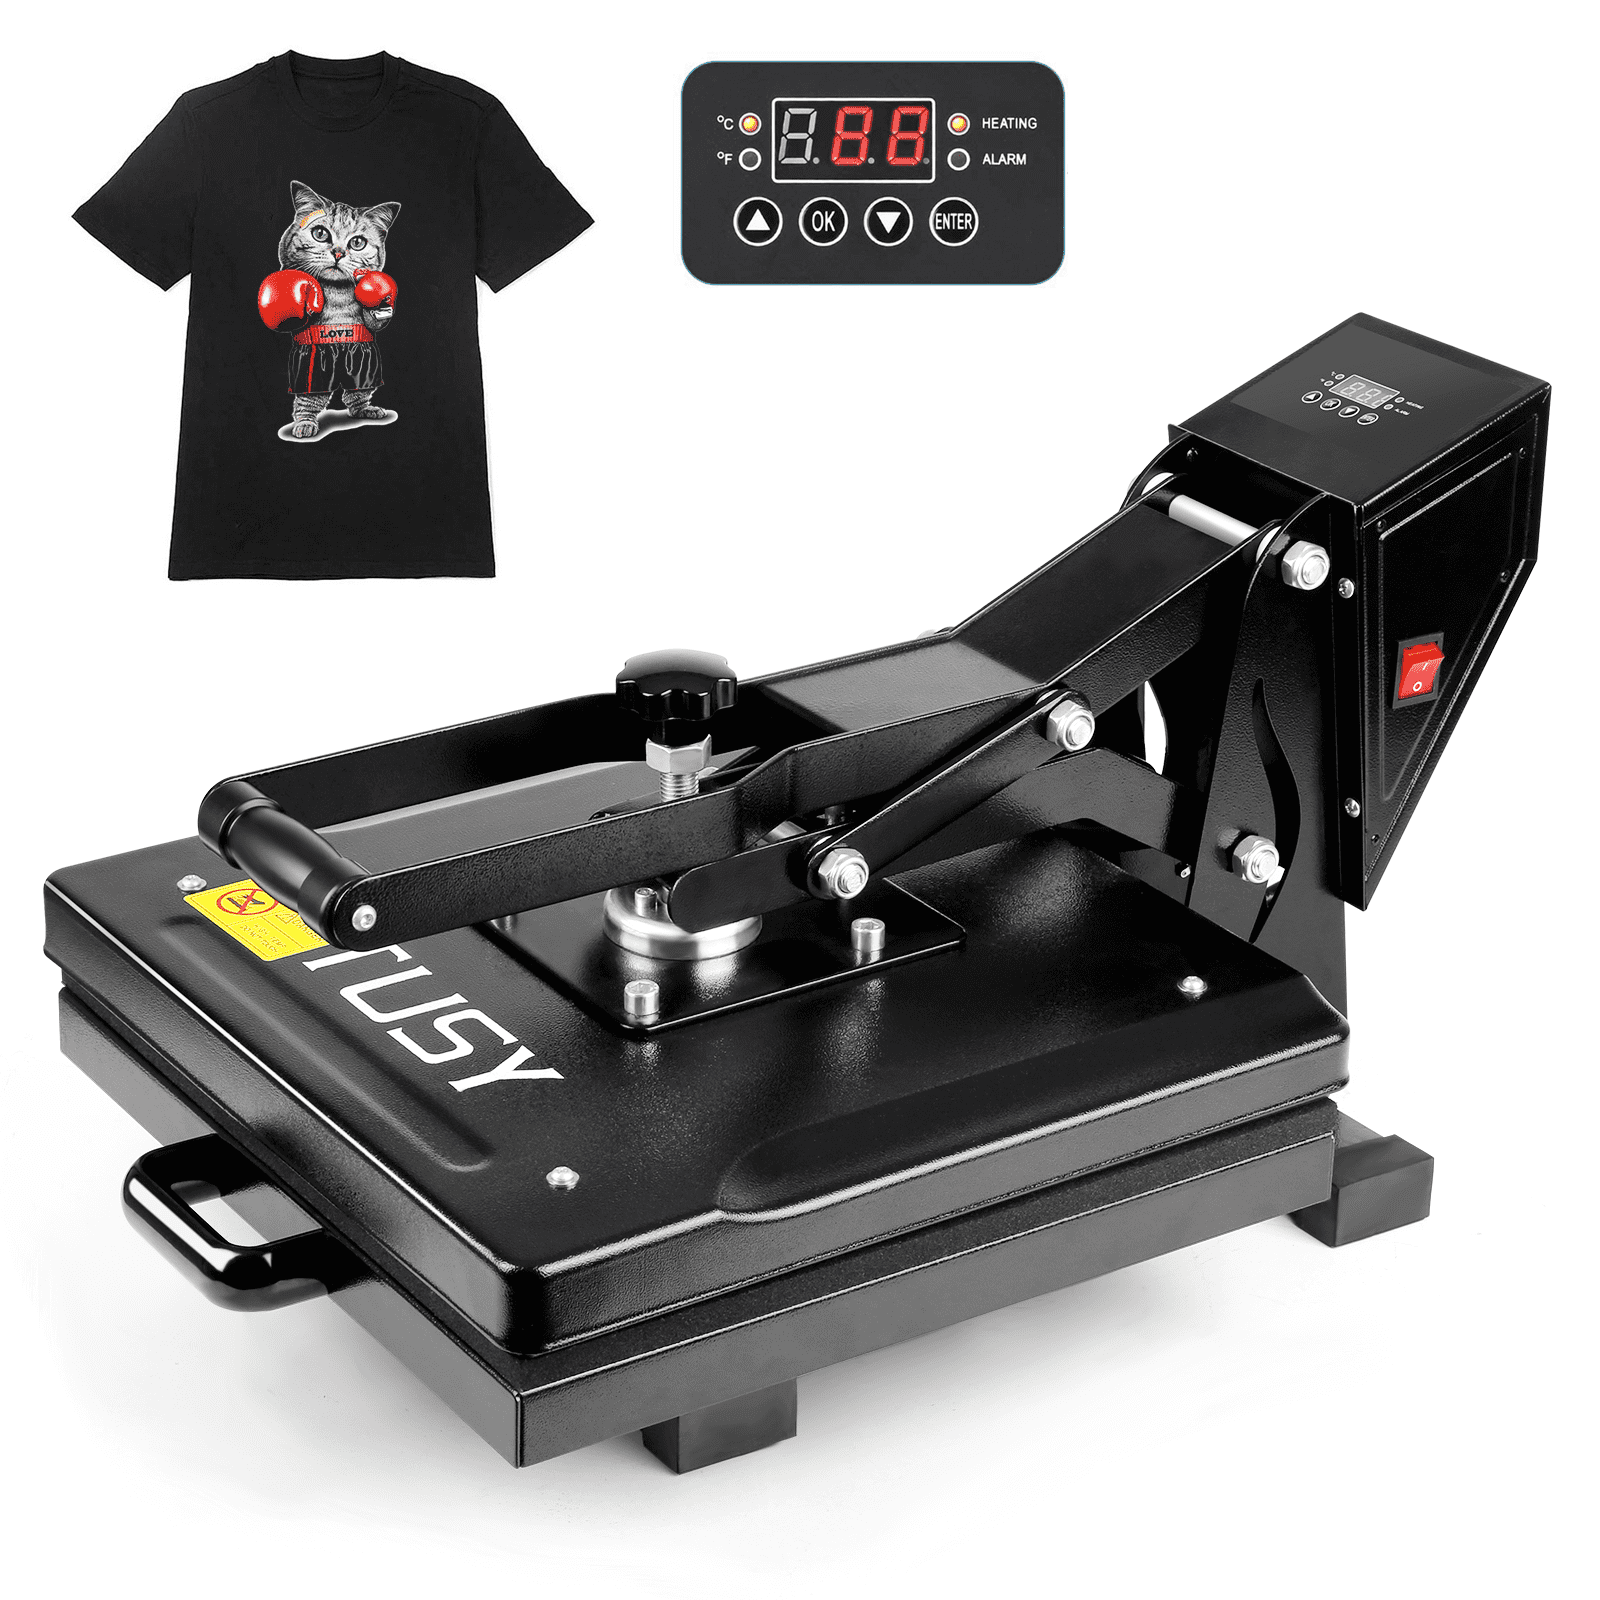  TUSY Heat Press 15x15 inch Digital Heat Press Machine, Slide  out Industrial Quality T-Shirt Heat Transfer Machine : Arts, Crafts & Sewing